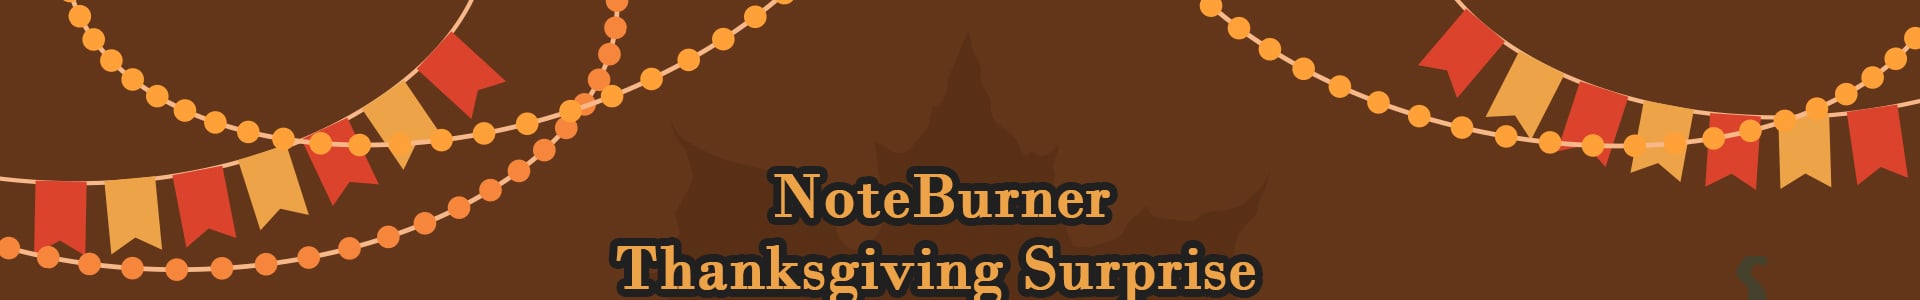 noteburner thanksgiving sale